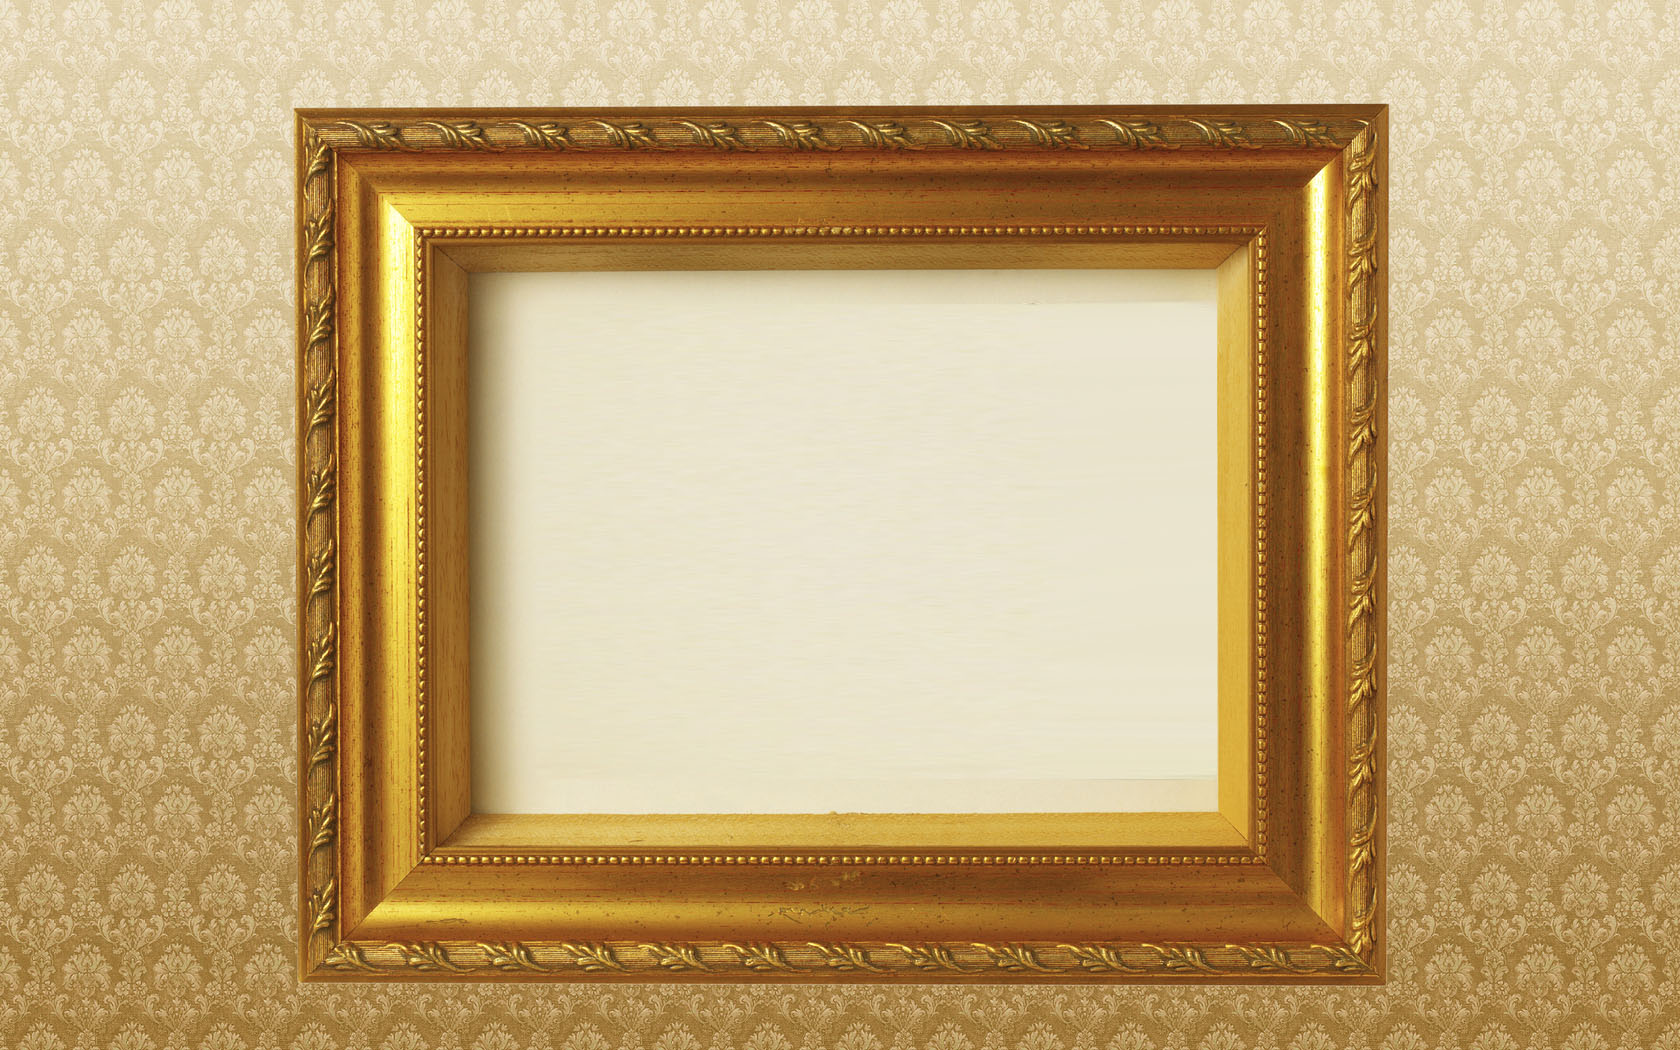 Gold Frame On Flower Pattern Background For